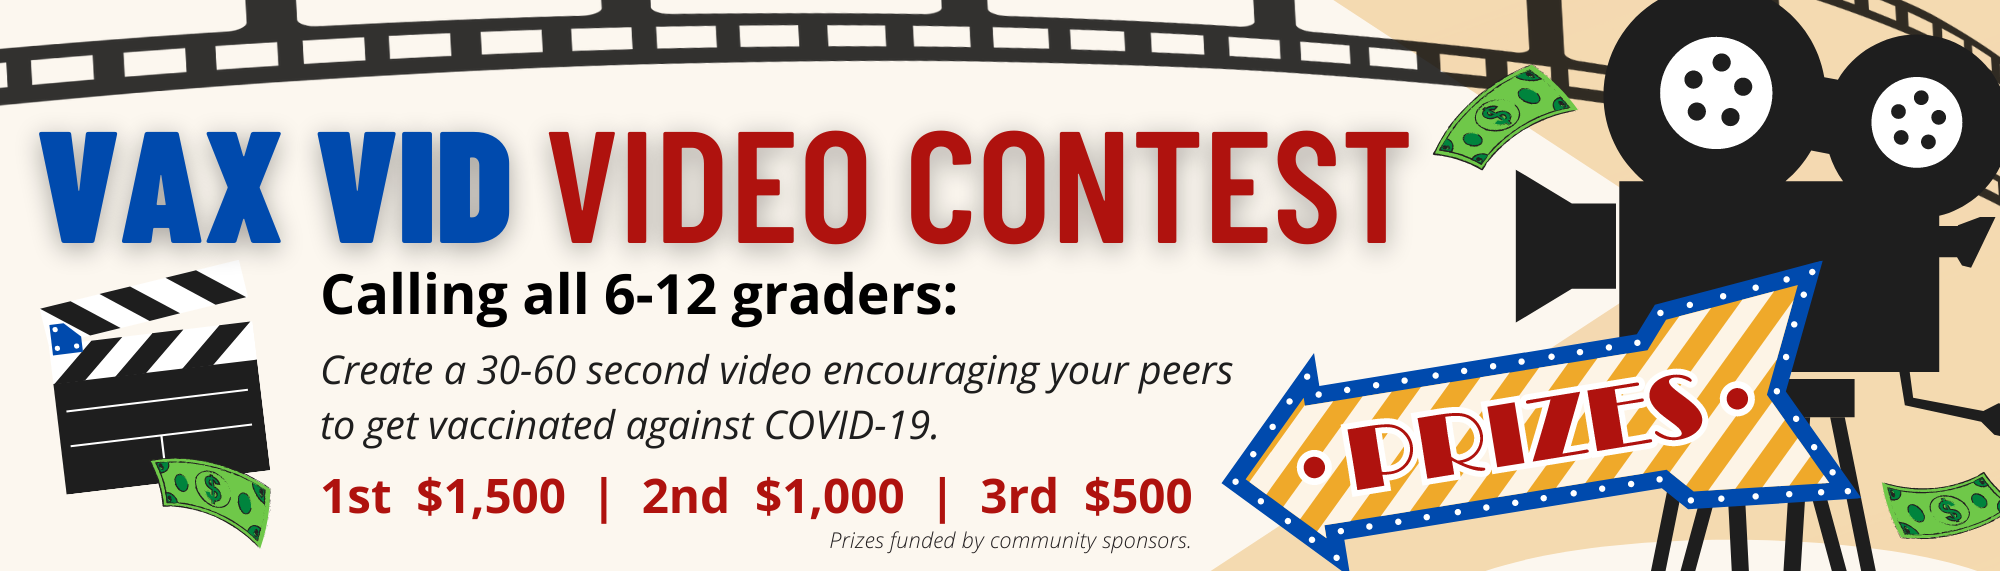 Vax Vid Video Contest Banner